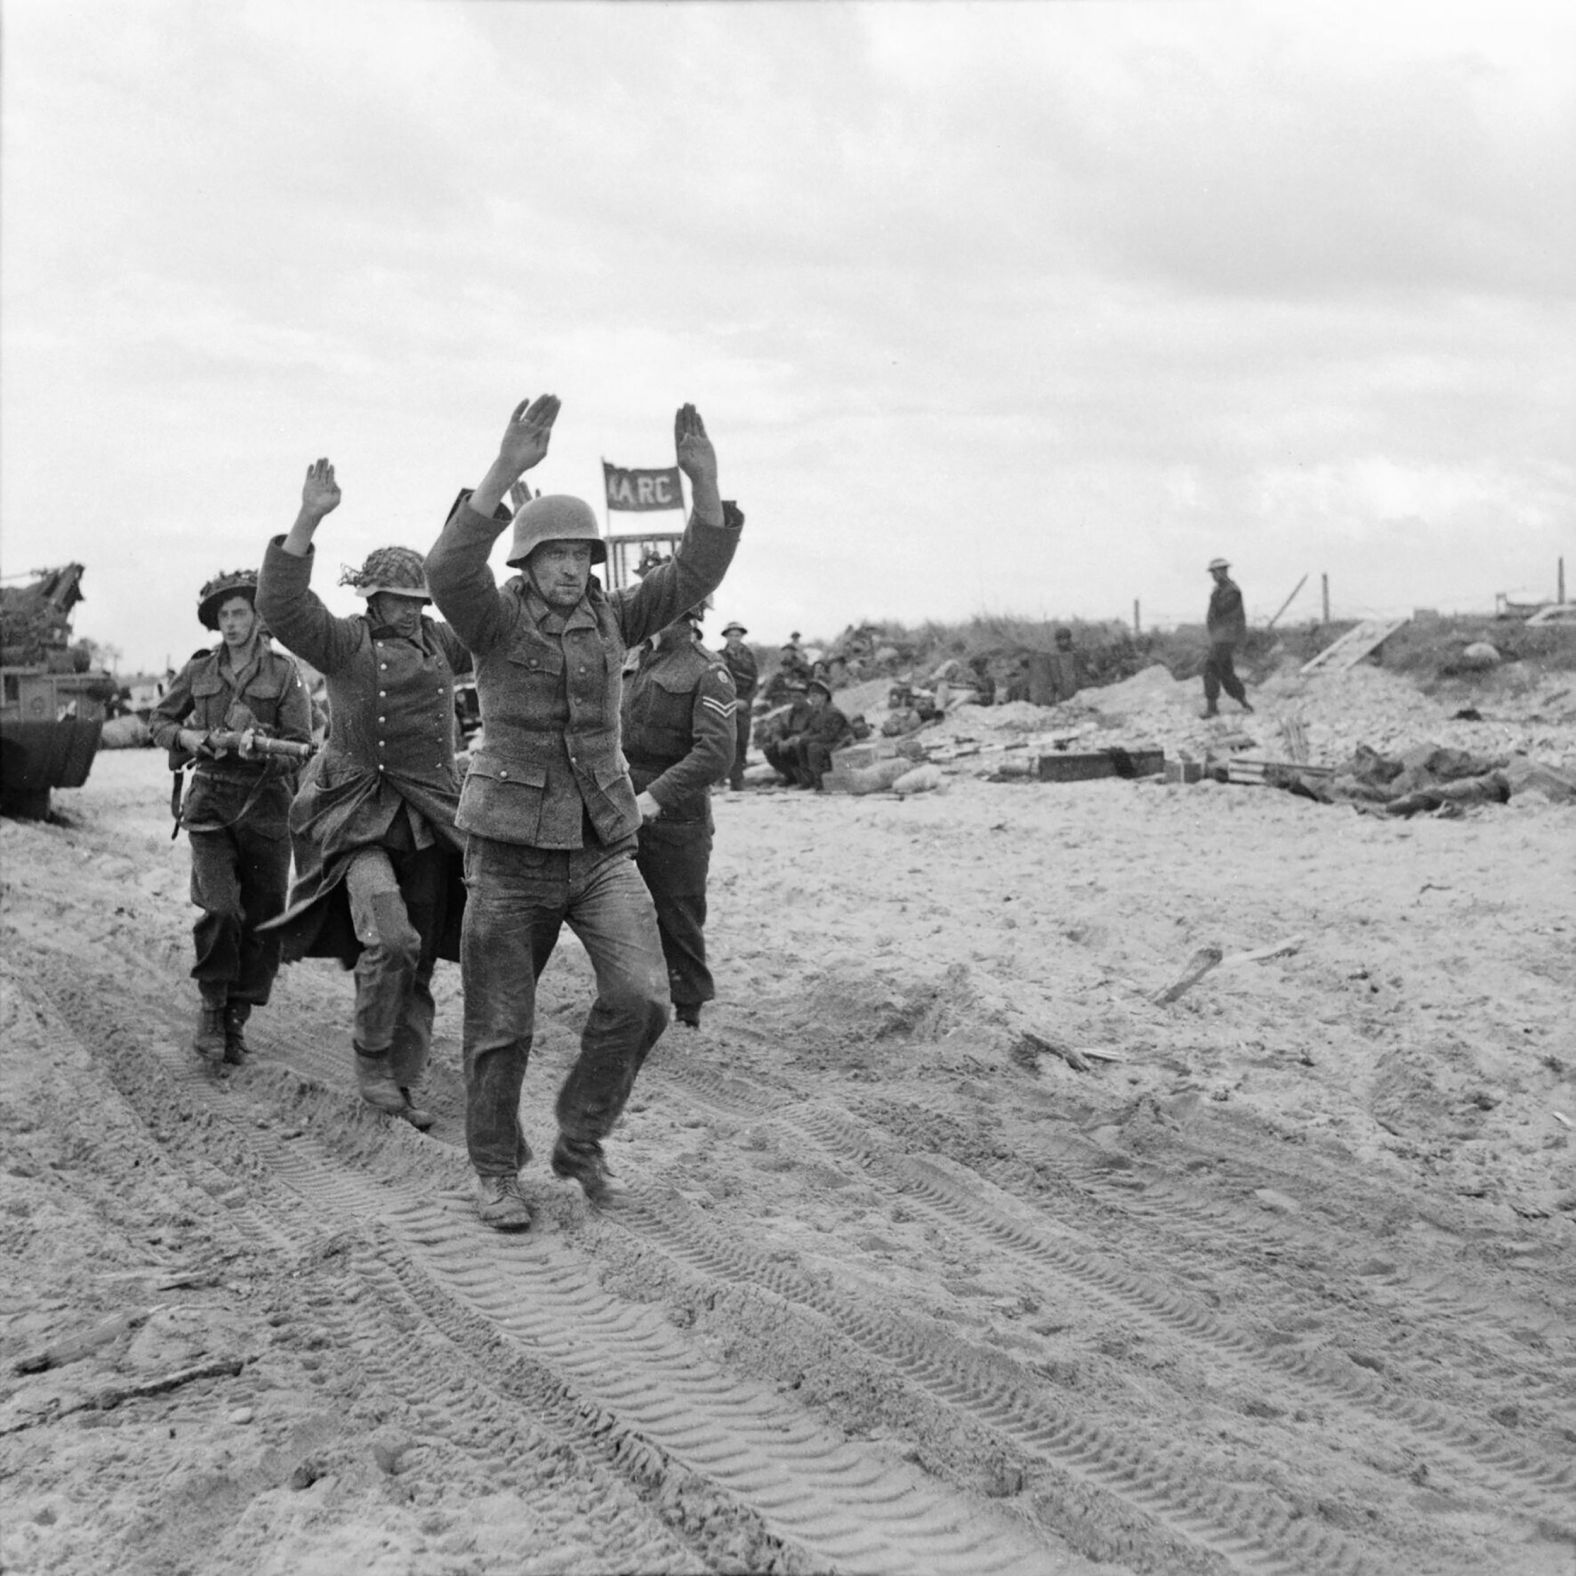 British troops escort German prisoners in Normandy.